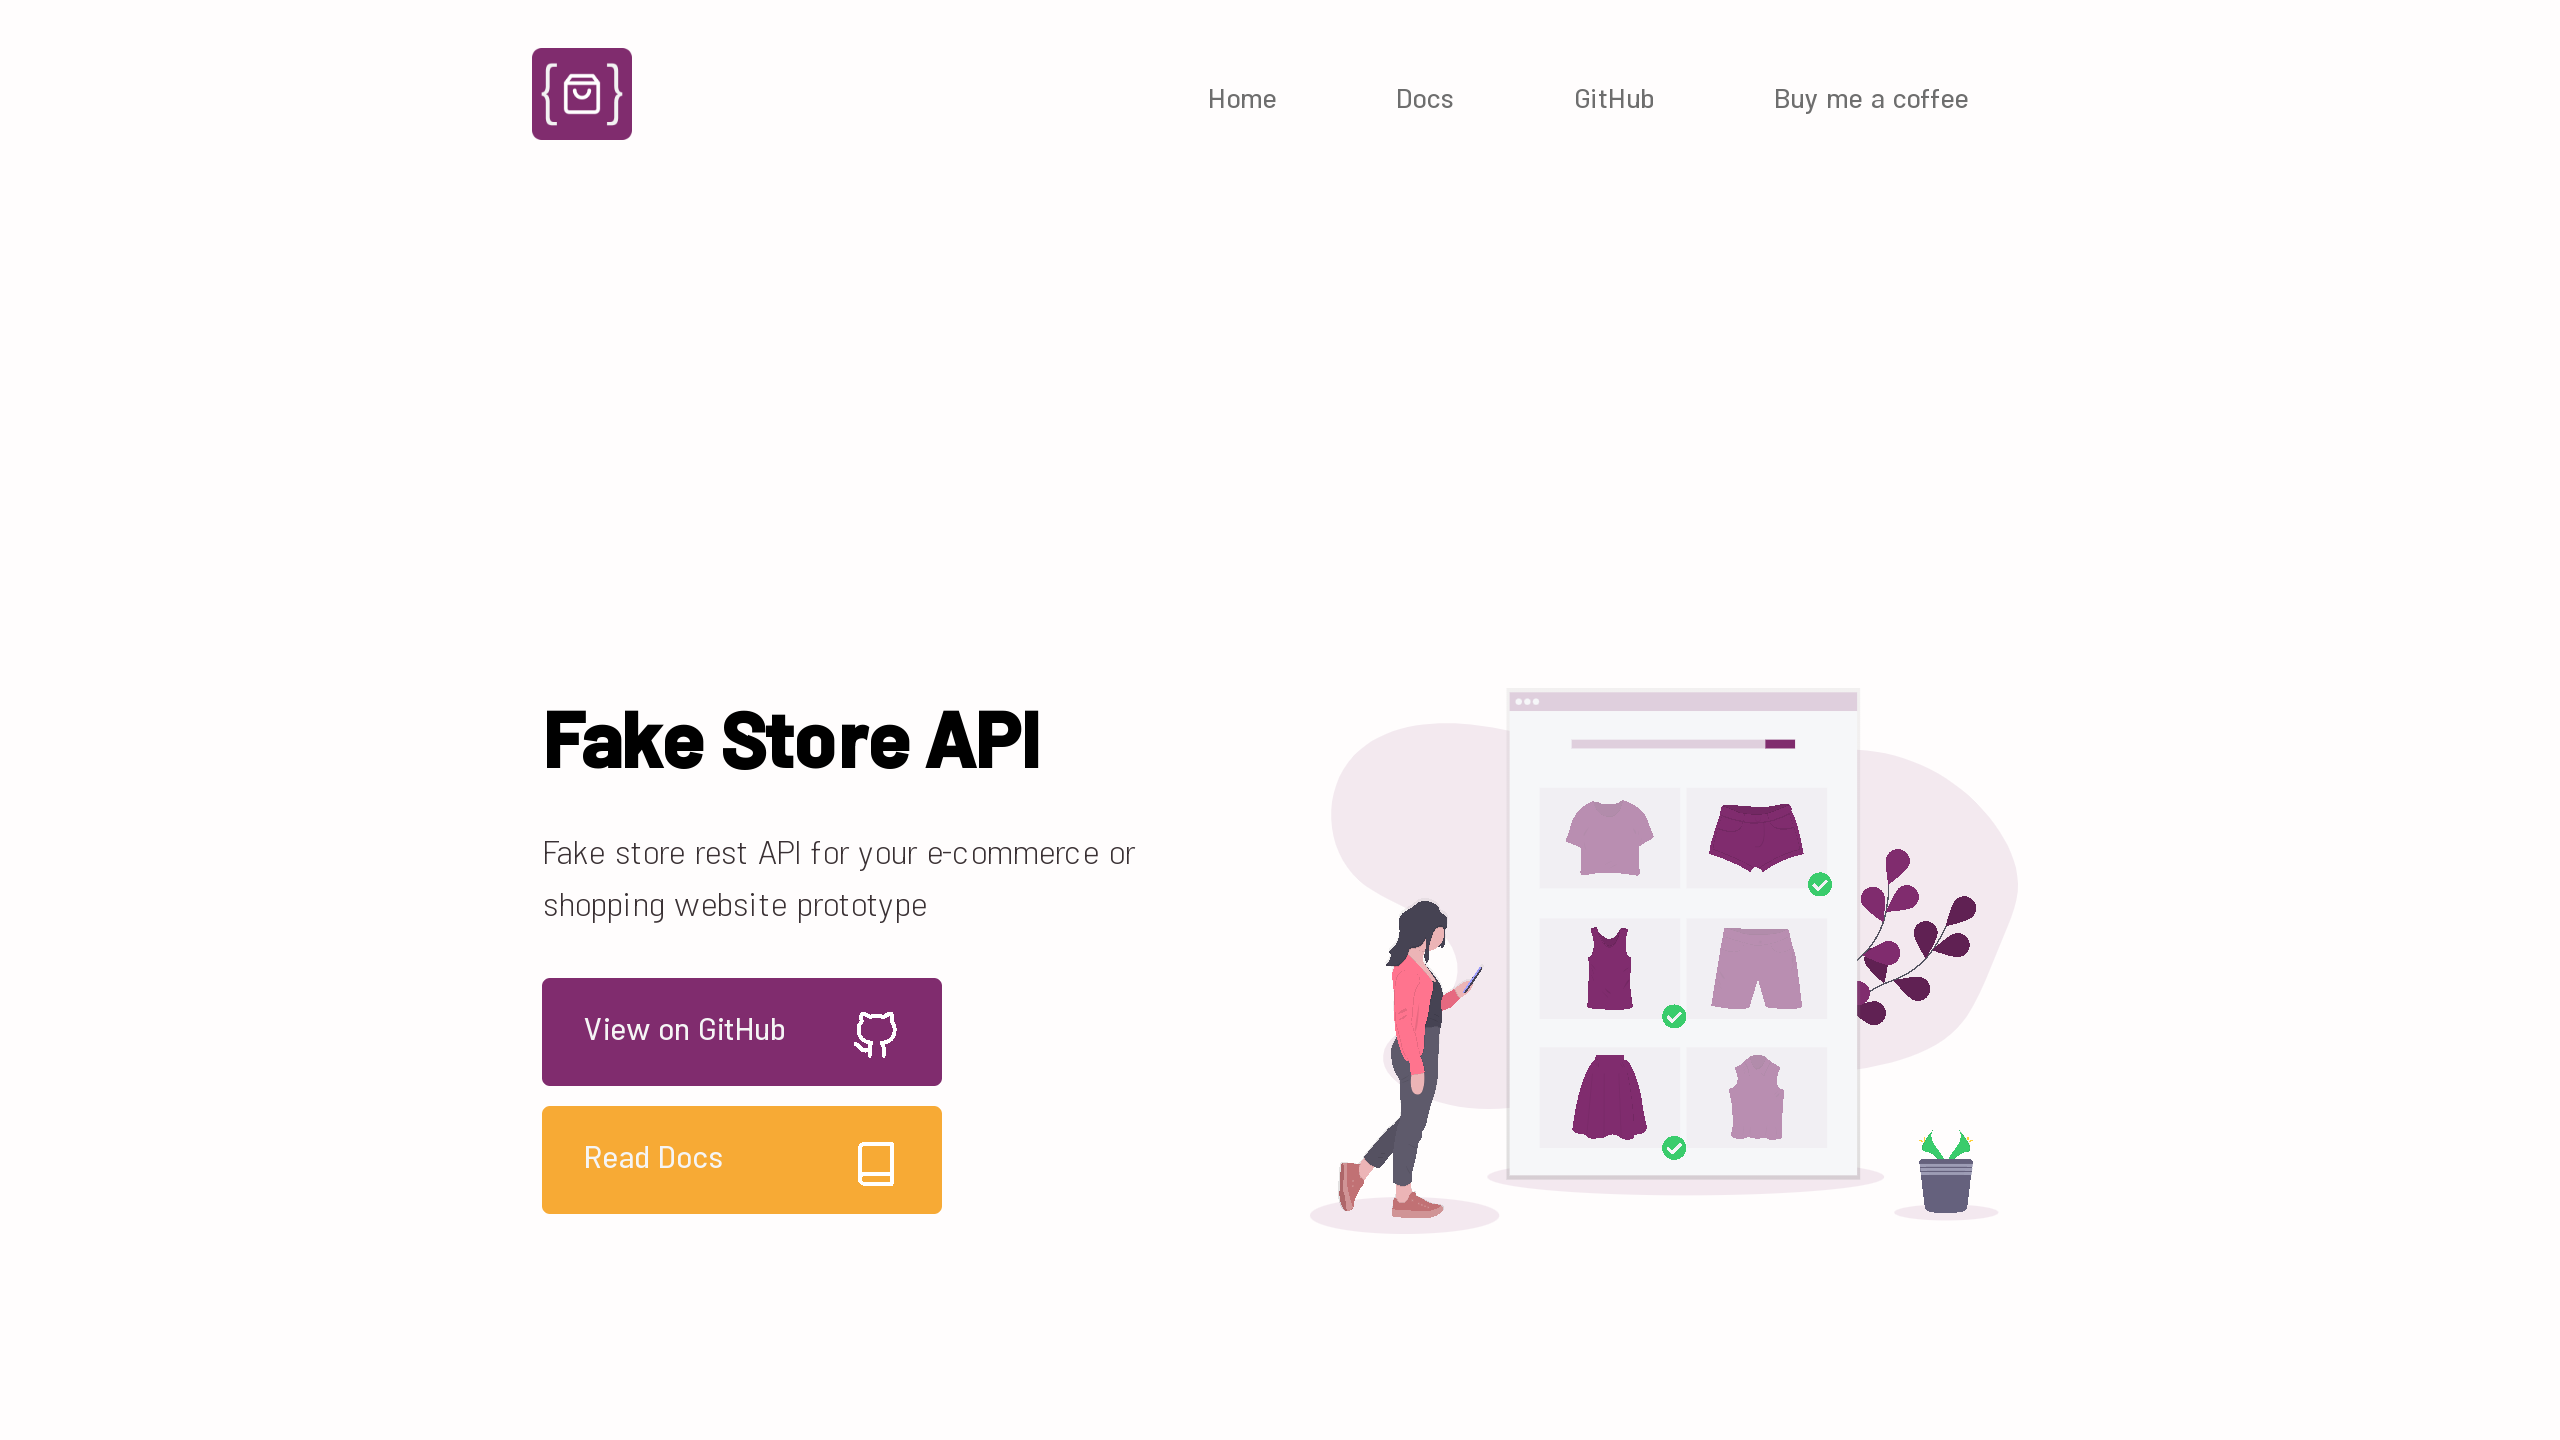 FakeStoreAPI's website screenshot